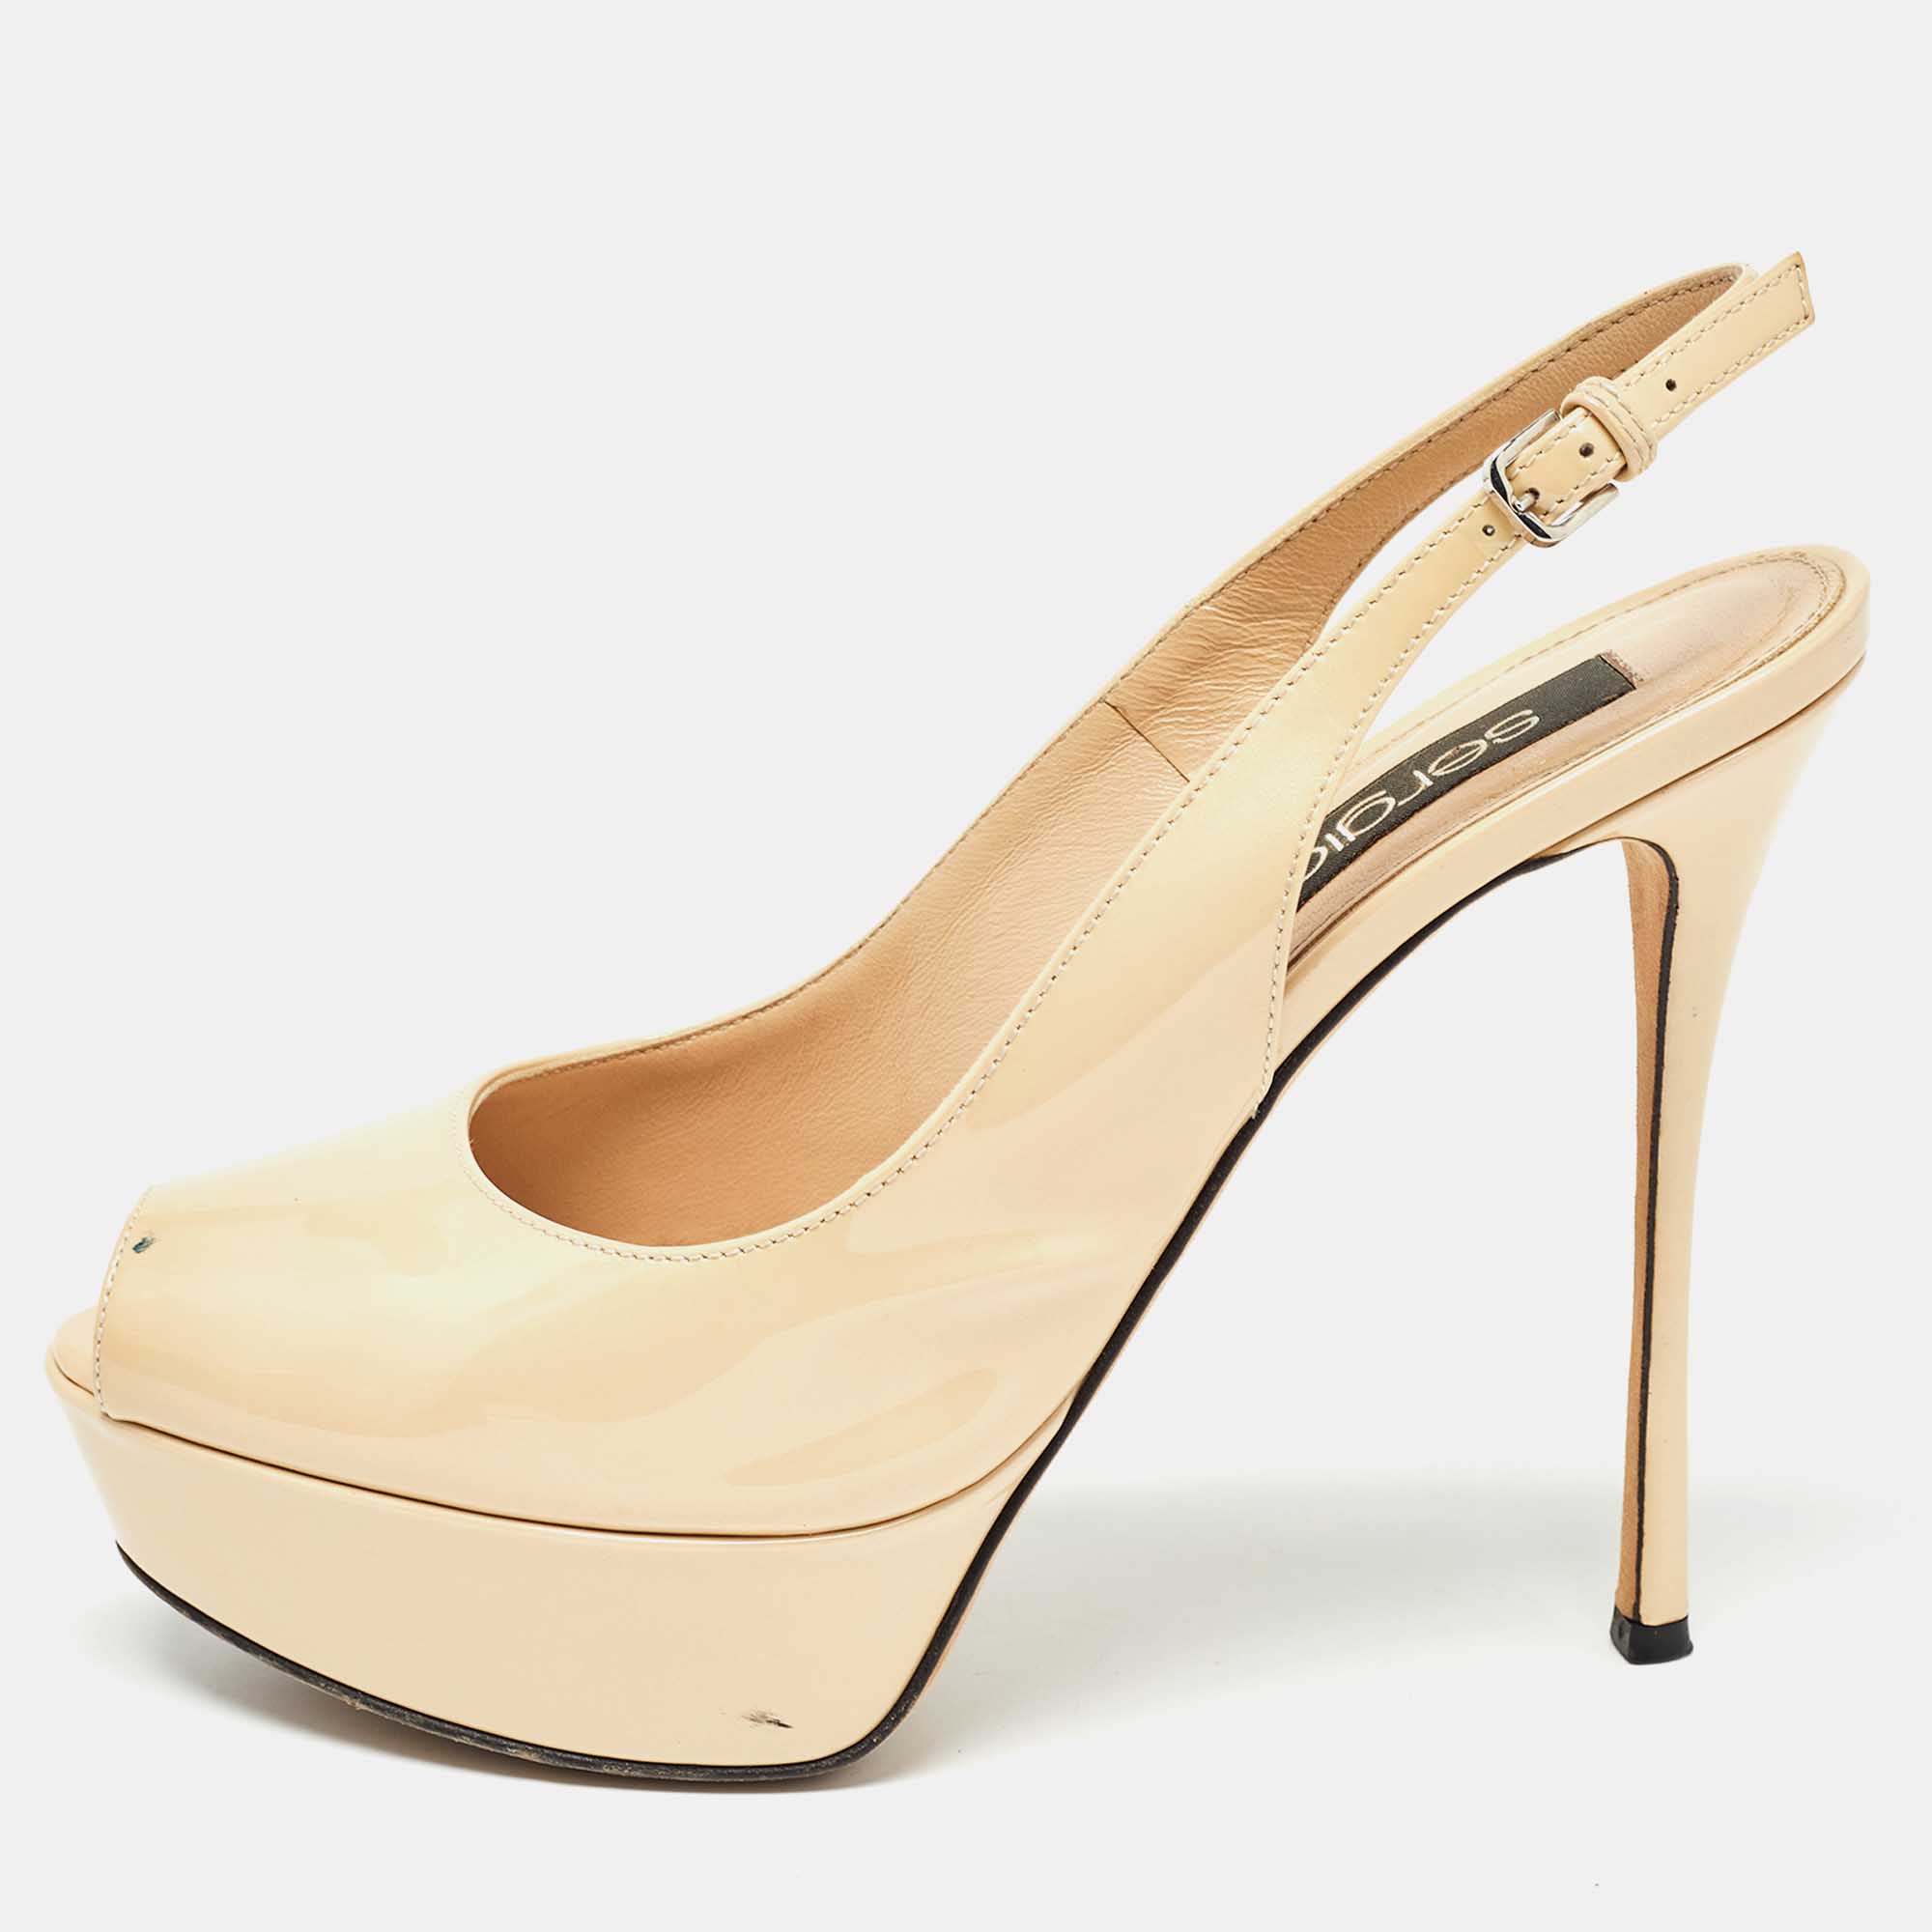 Sergio rossi beige patent leather peep toe slingback pumps size 36